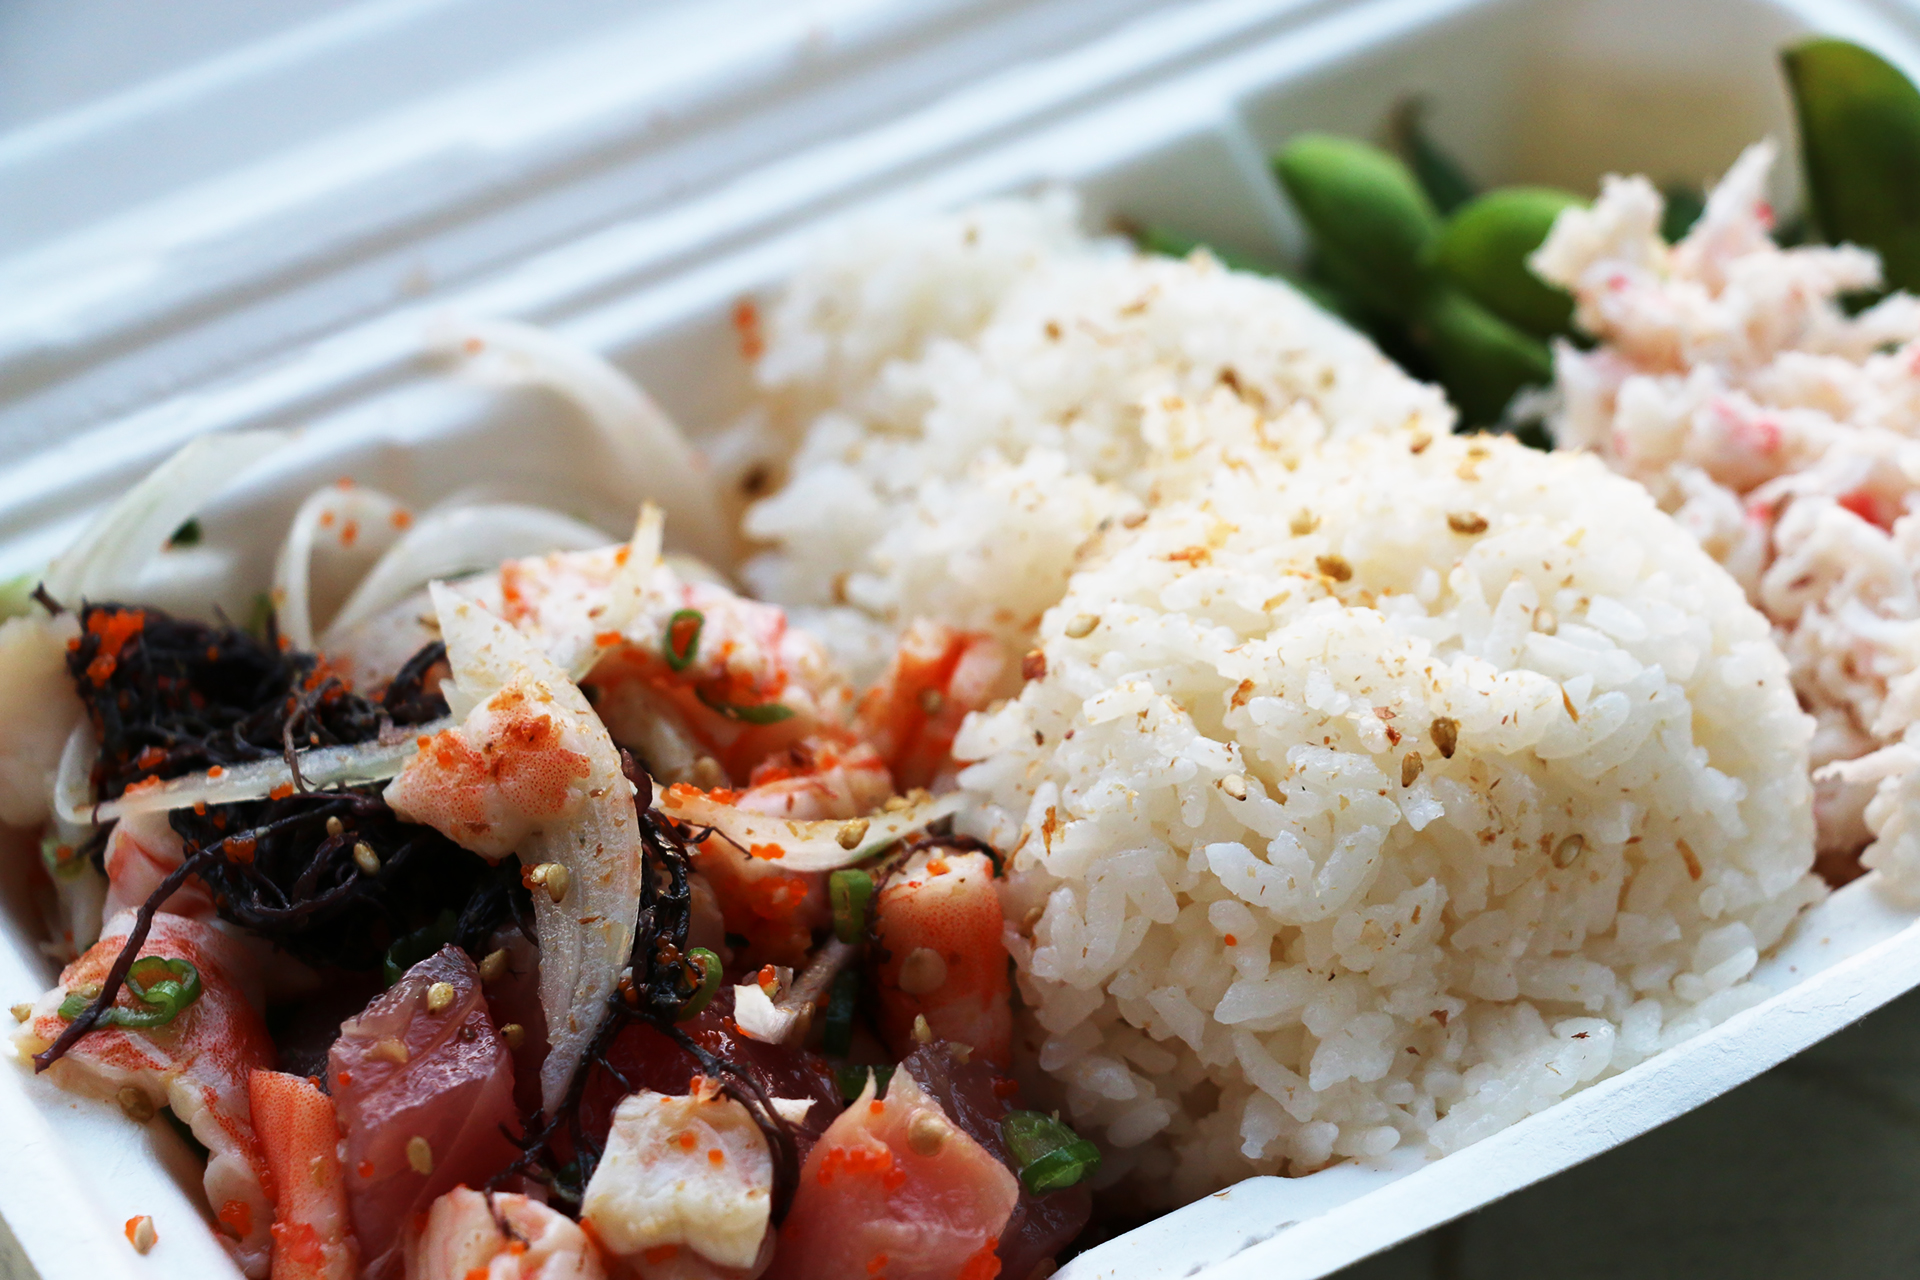 A bowl with hamachi, tuna and shrimp on sushi rice.